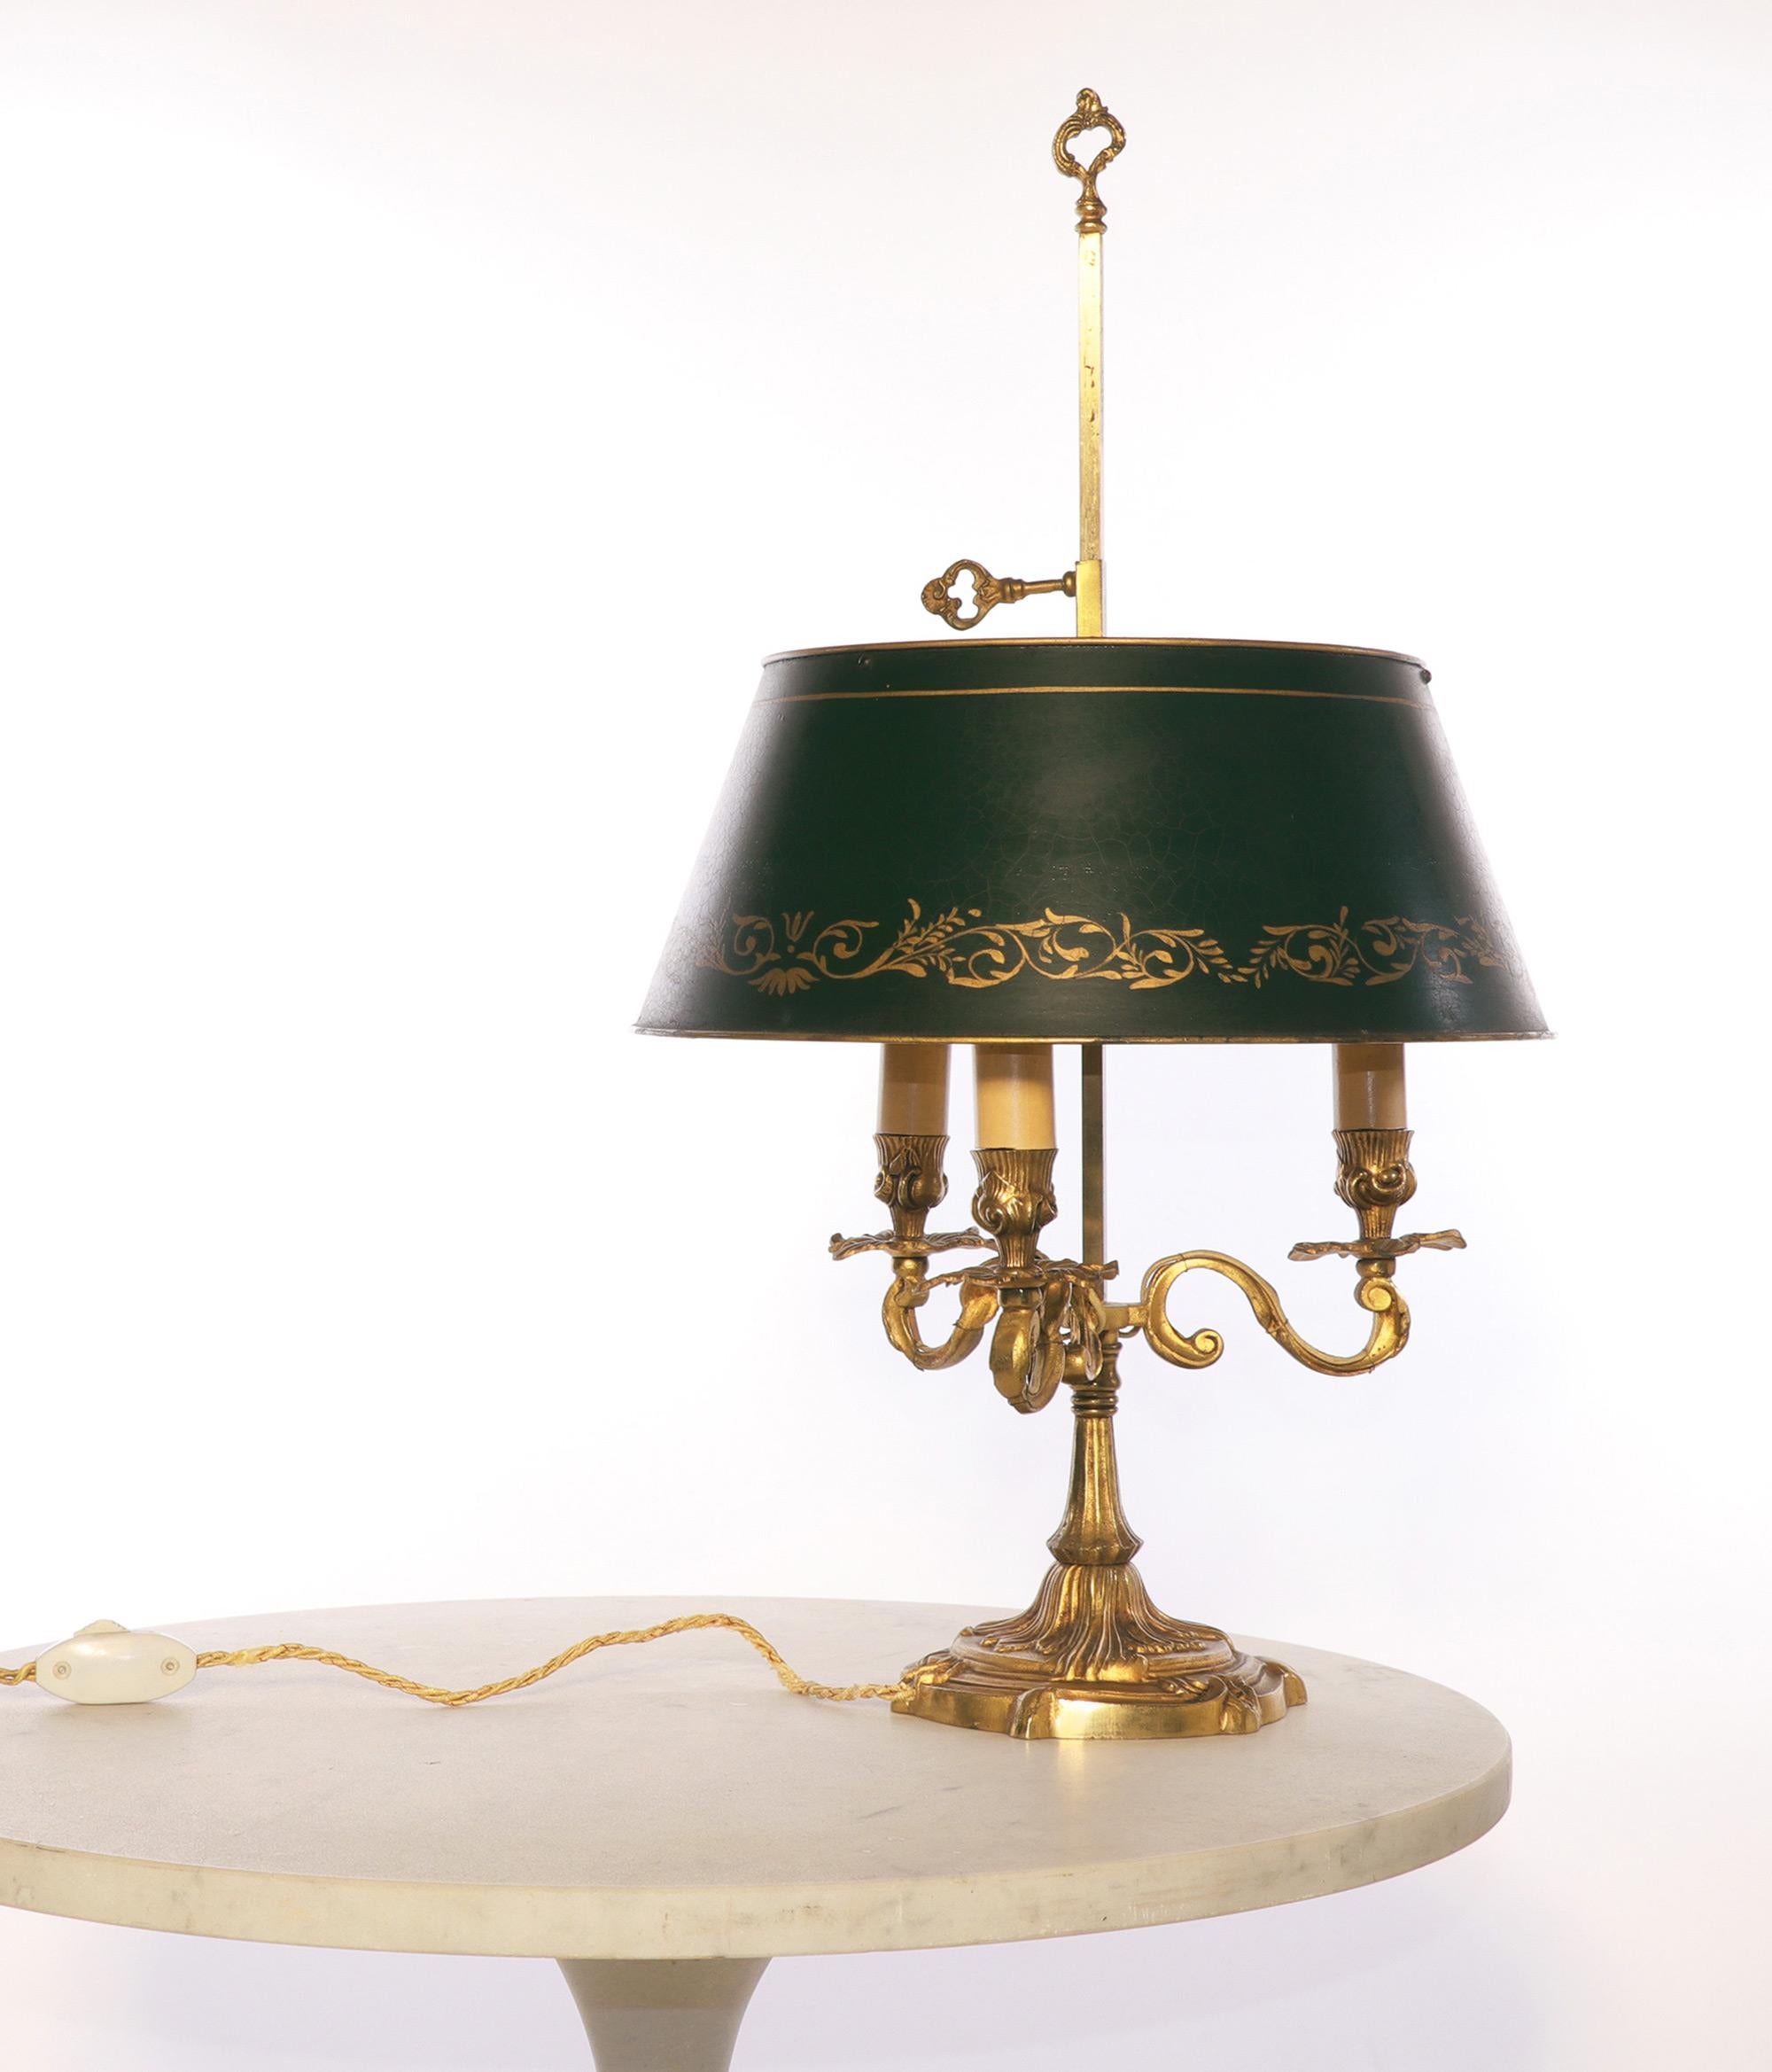 French Gilt Bronze Louis XV Style Bouillotte Lamp, 19th Century (Französisch)